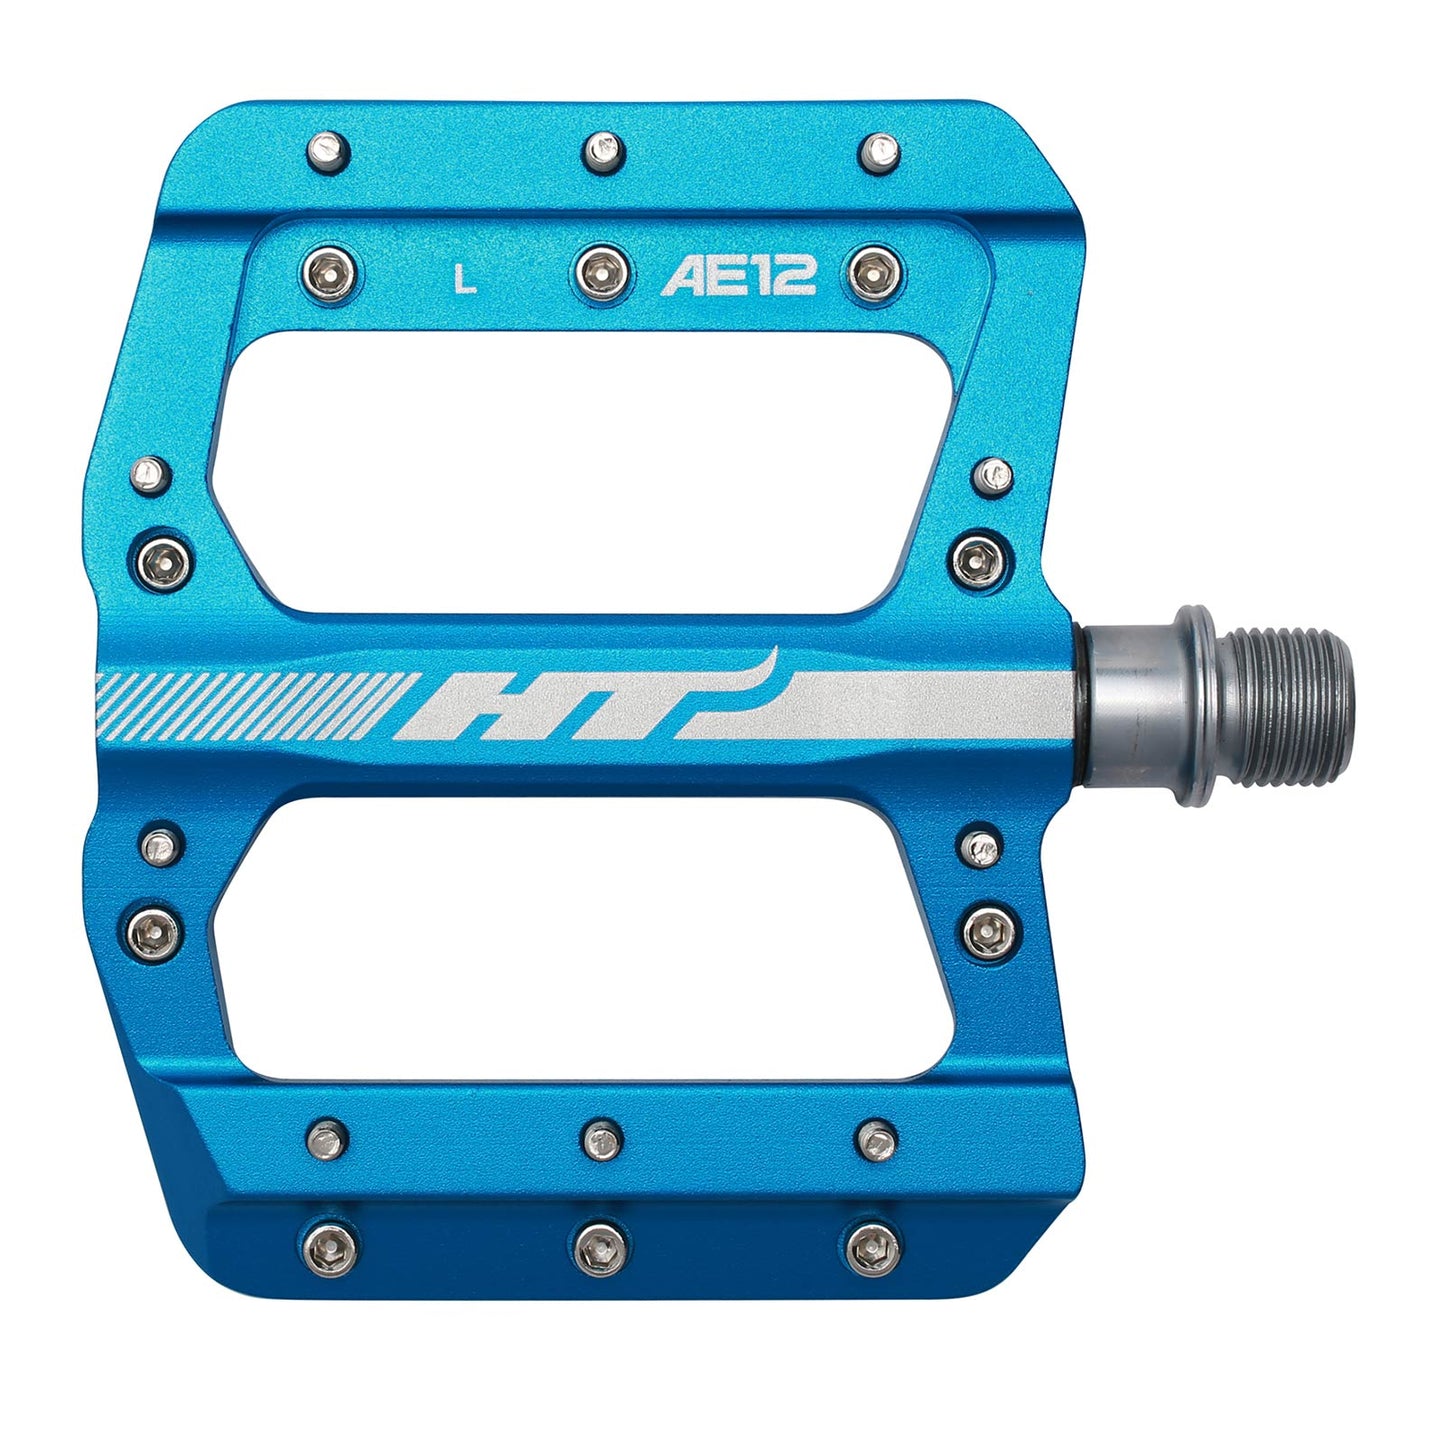 Ht AE12 Pedals Alloy / CNC CRMO - Marine Blue